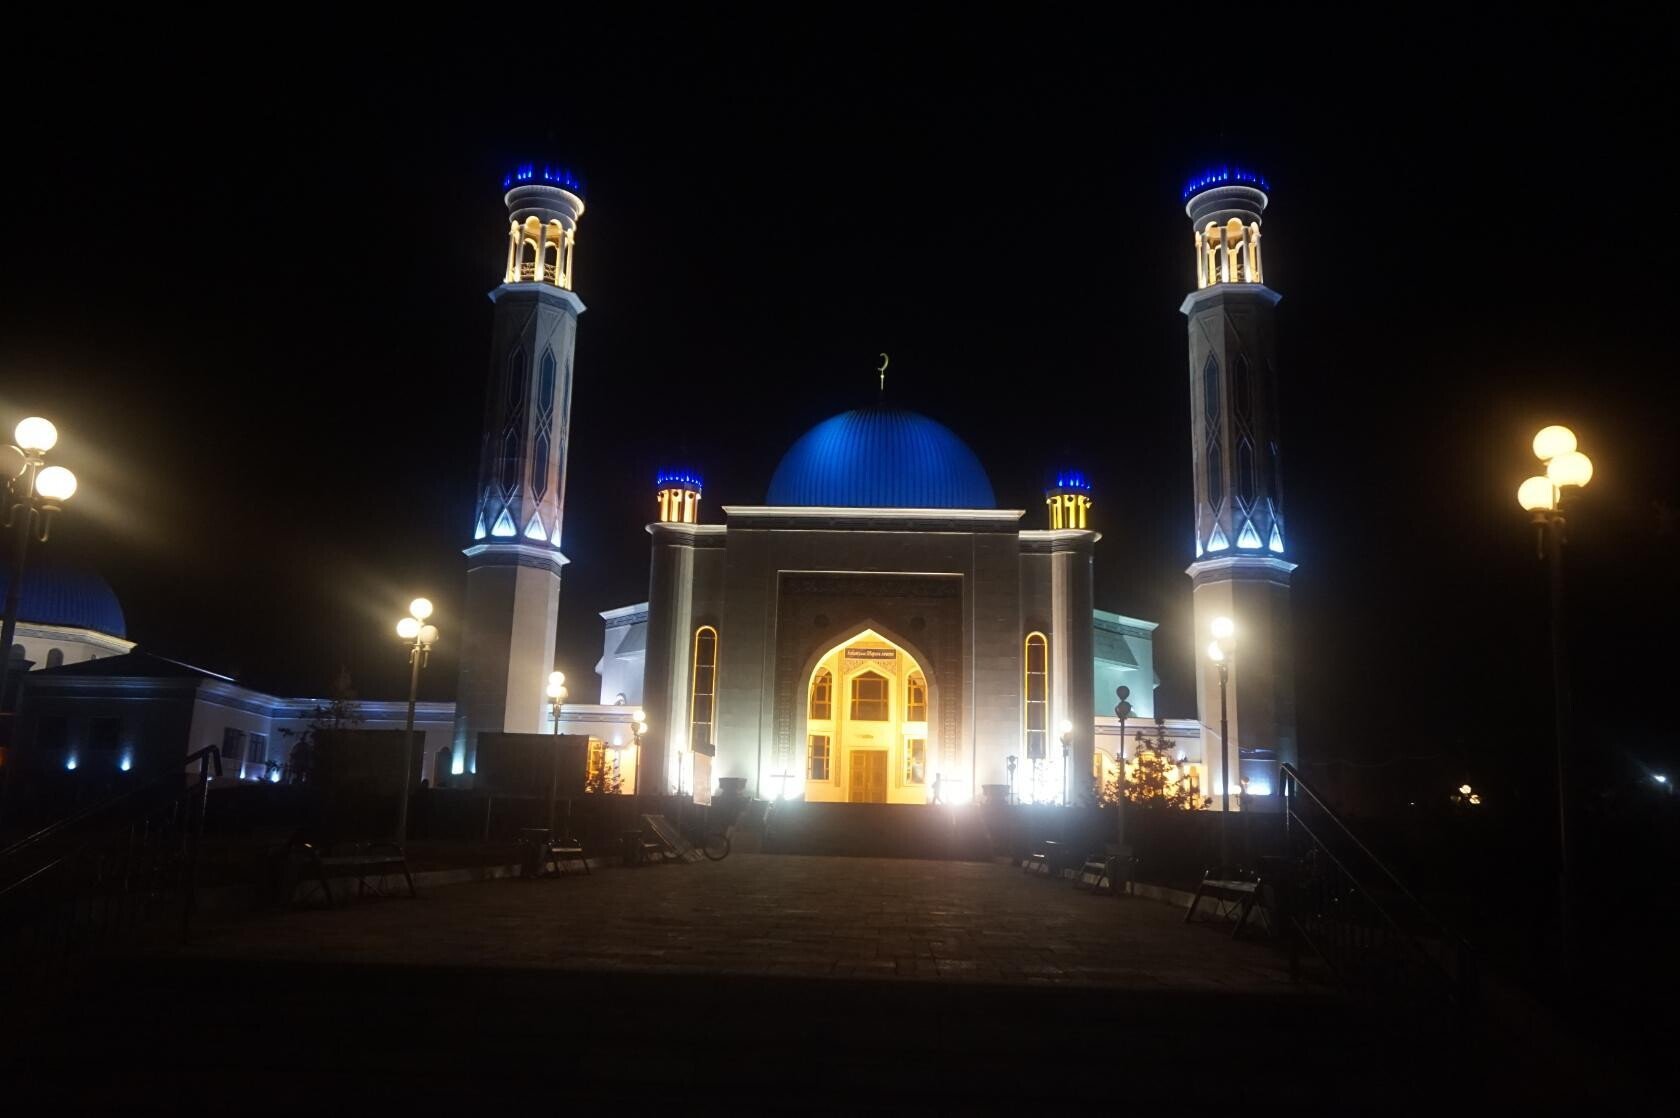 Тараз какой город. Тараз город в Казахстане. Джамбул город в Казахстане. Ночной город Тараз Казахстан. Город Джамбул Казахстан мечеть.